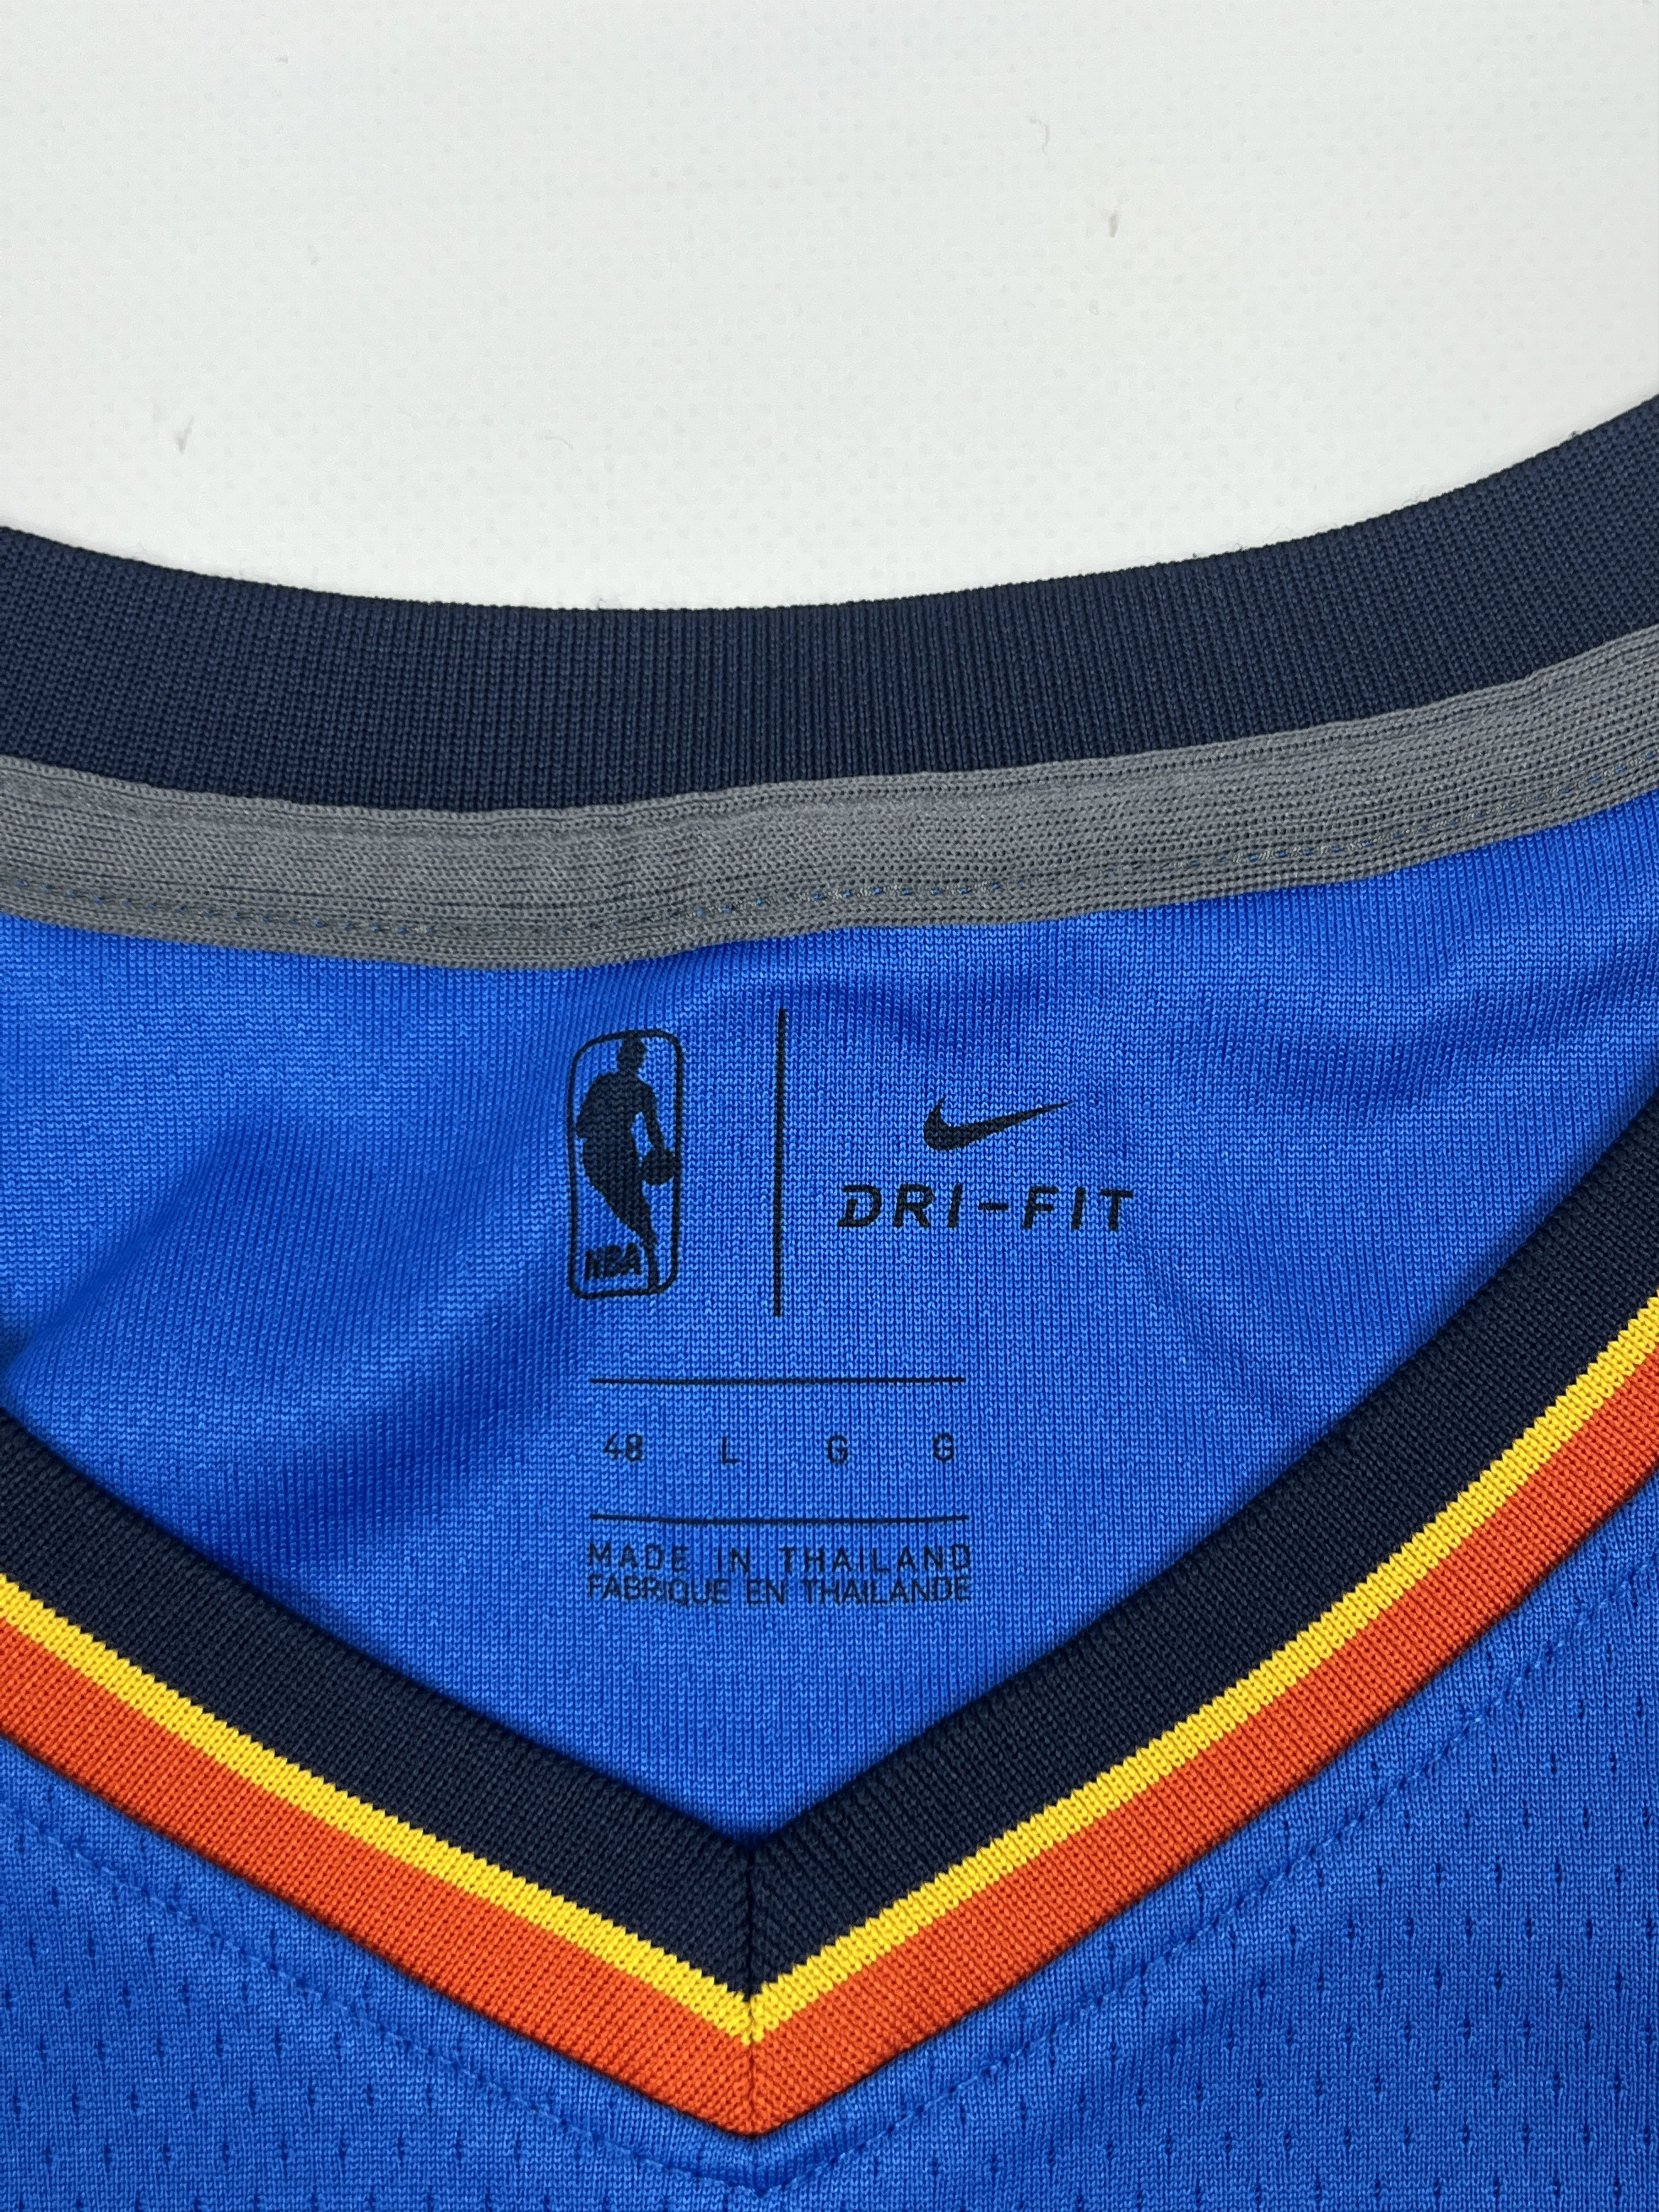 Nike Nike Oklahoma City Thunder #13 PAUL GEORGE Basketball Jersey Size US L / EU 52-54 / 3 - 2 Preview